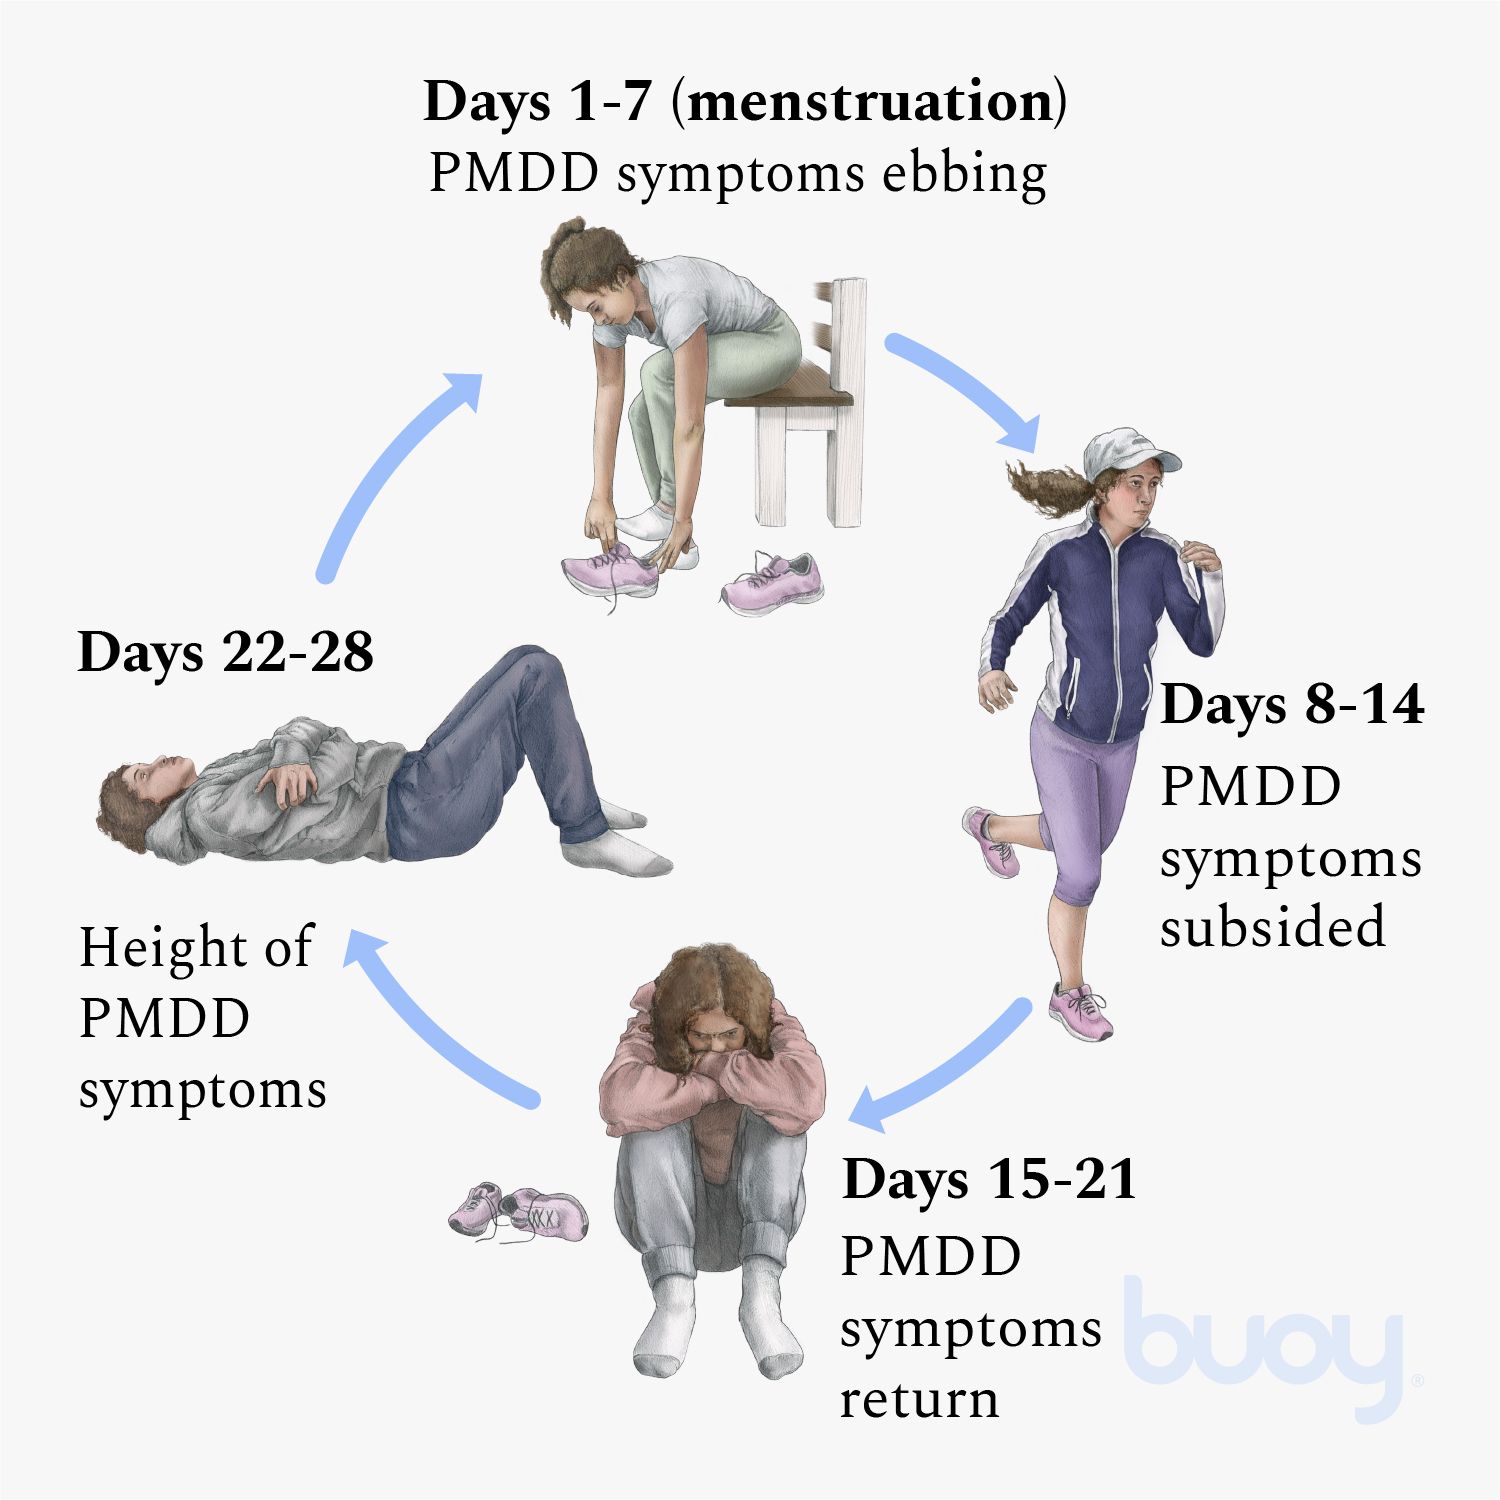 Symptoms described by women suffering PMS or PMDD